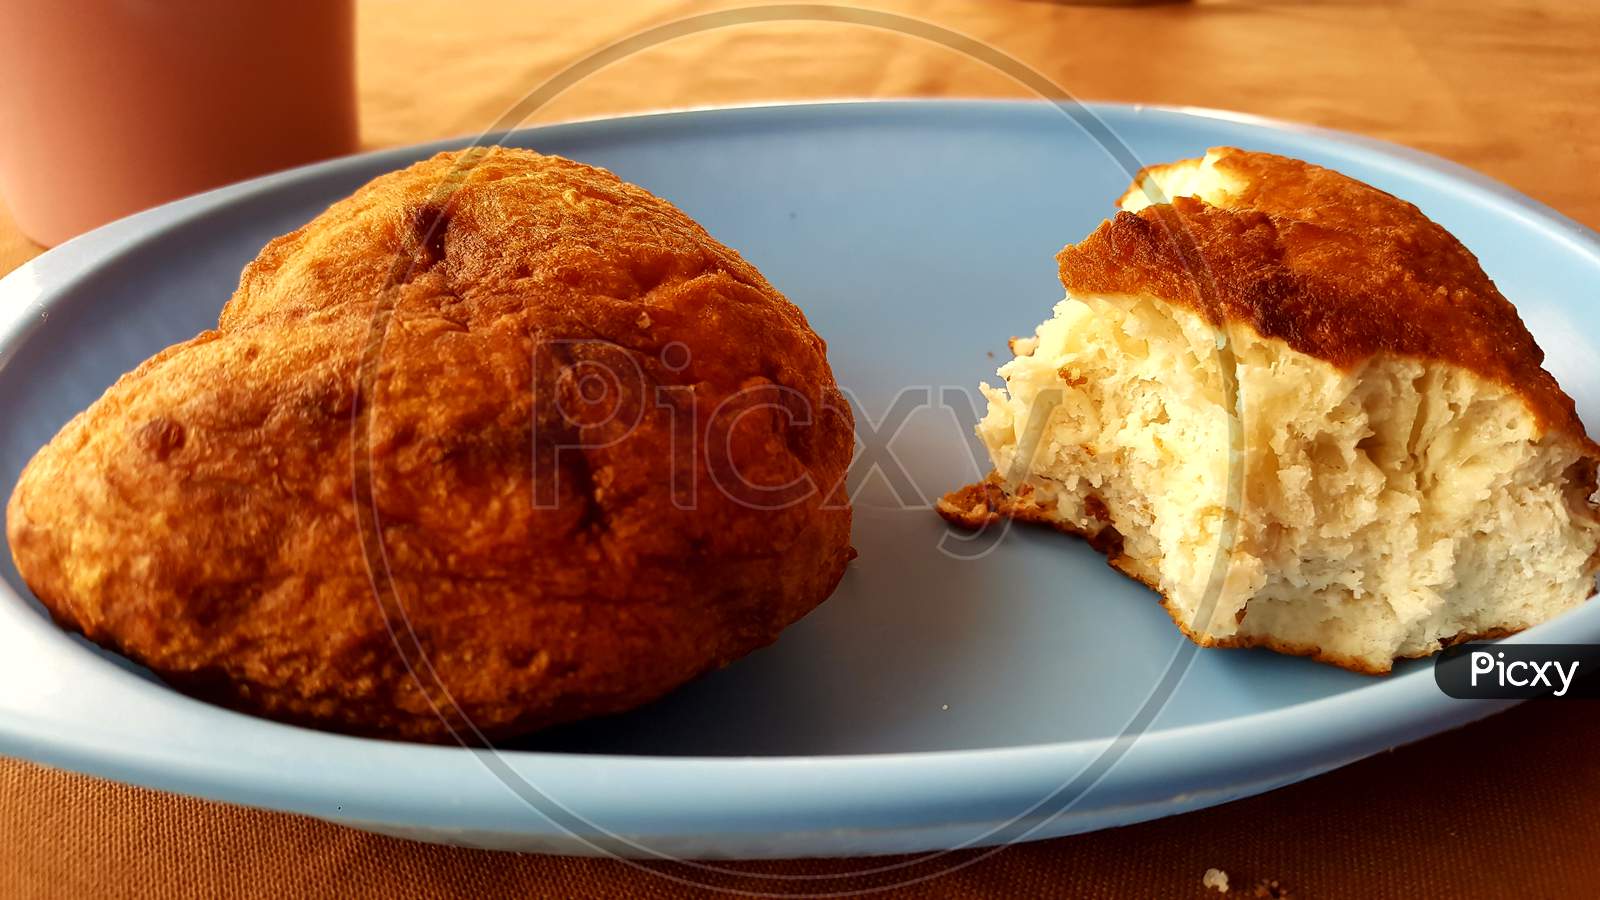 fatcakes on a blue plate